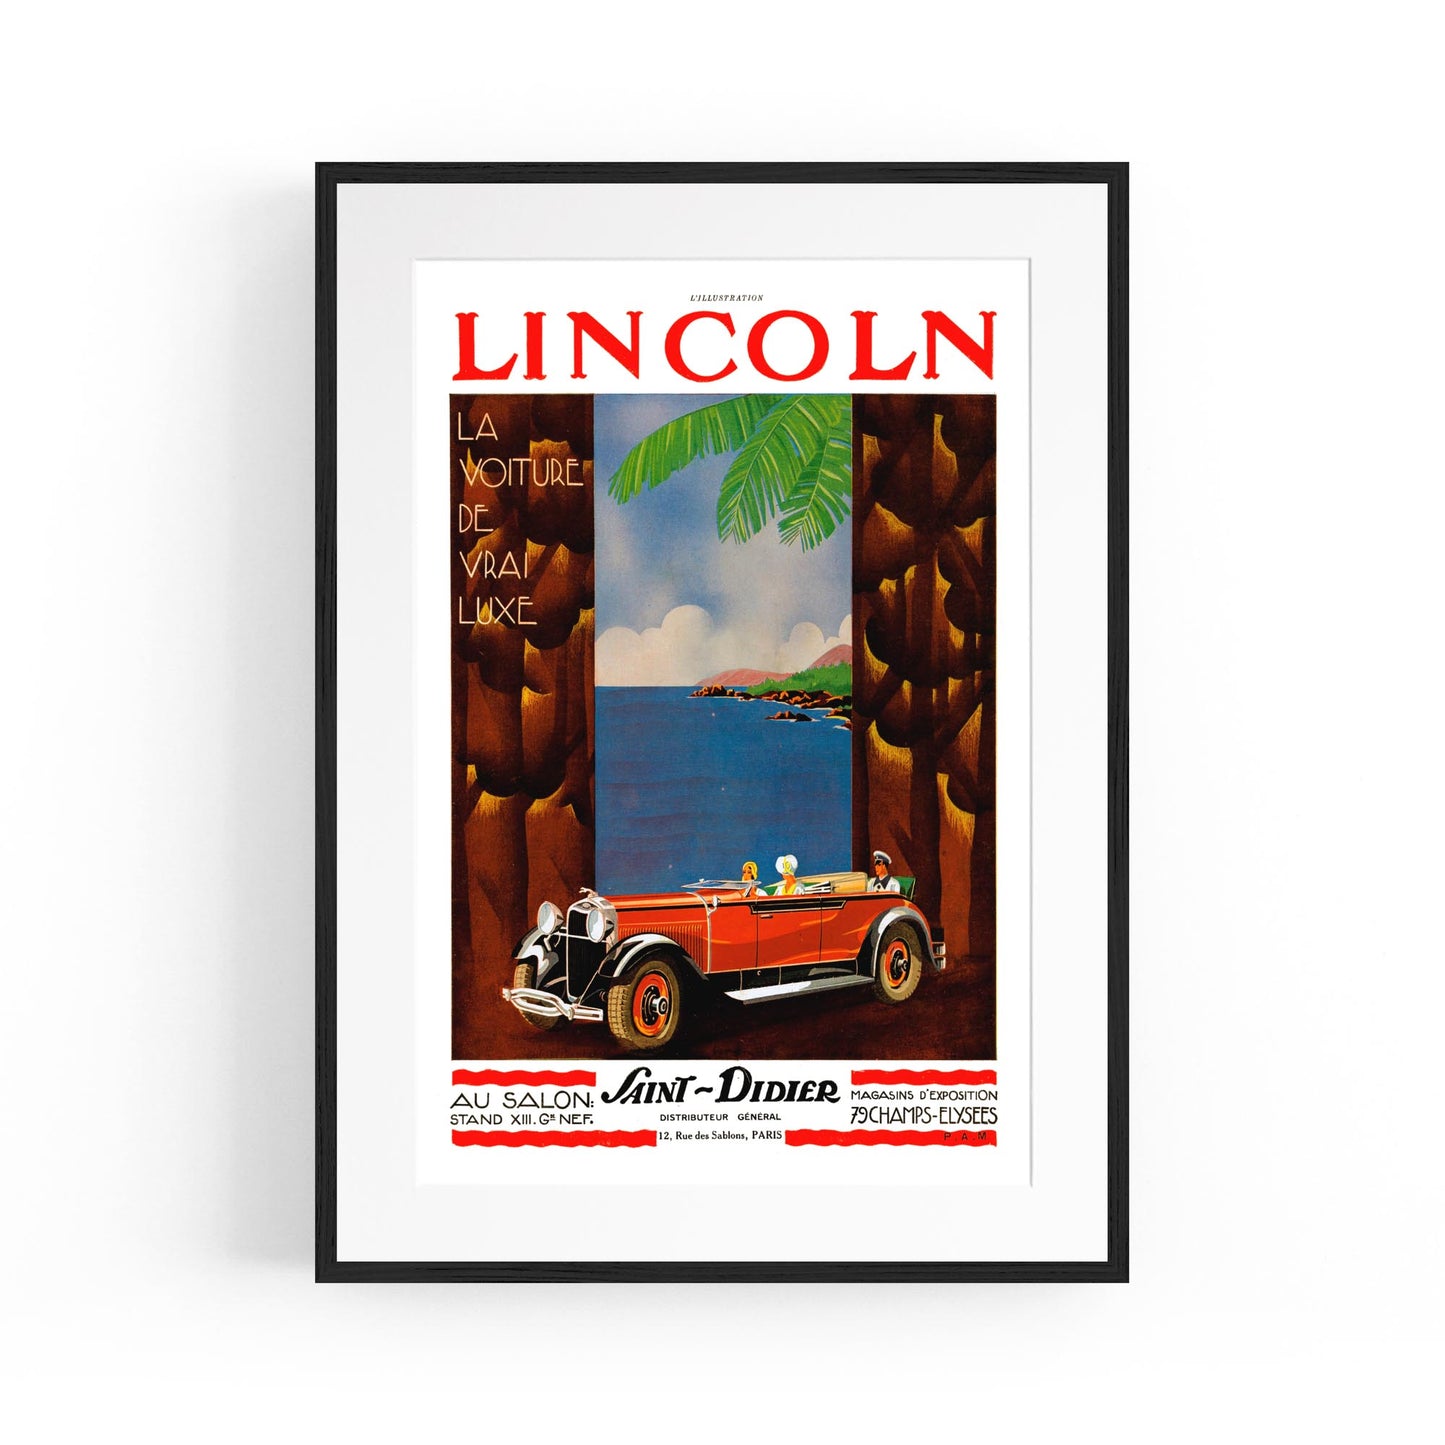 "Lincoln Saint Didier" French Car | Framed Vintage Poster